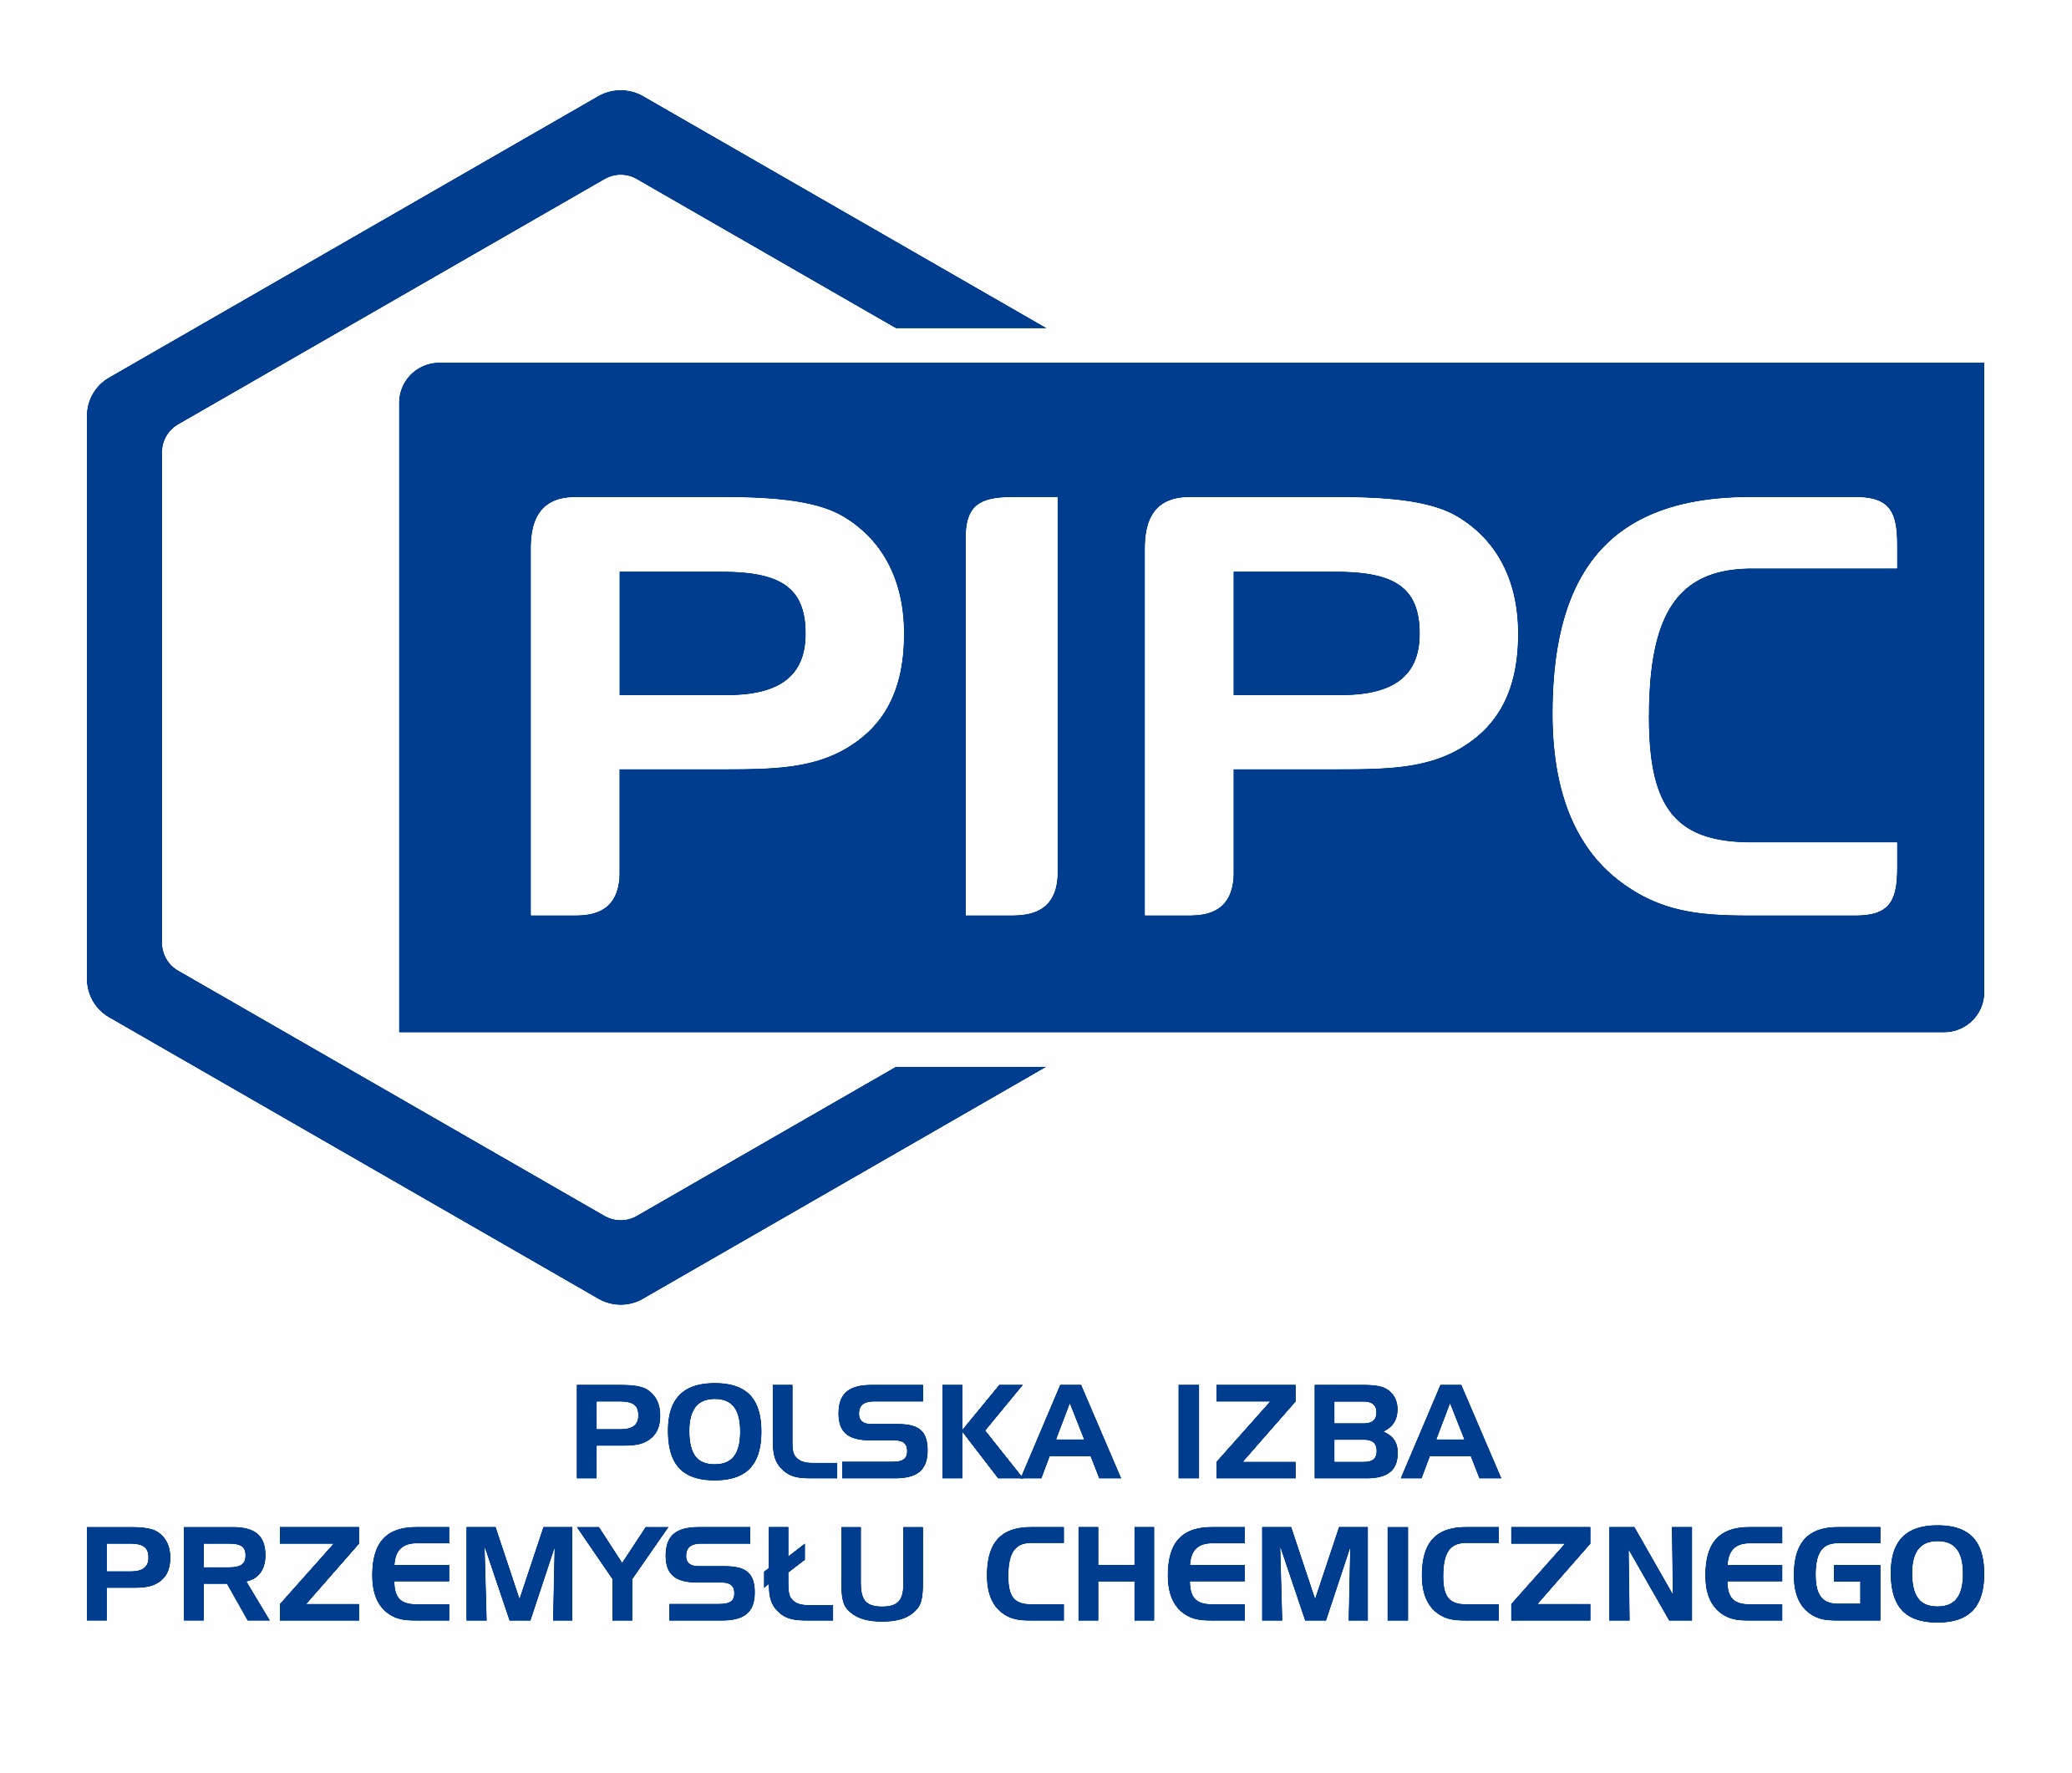 PIPC